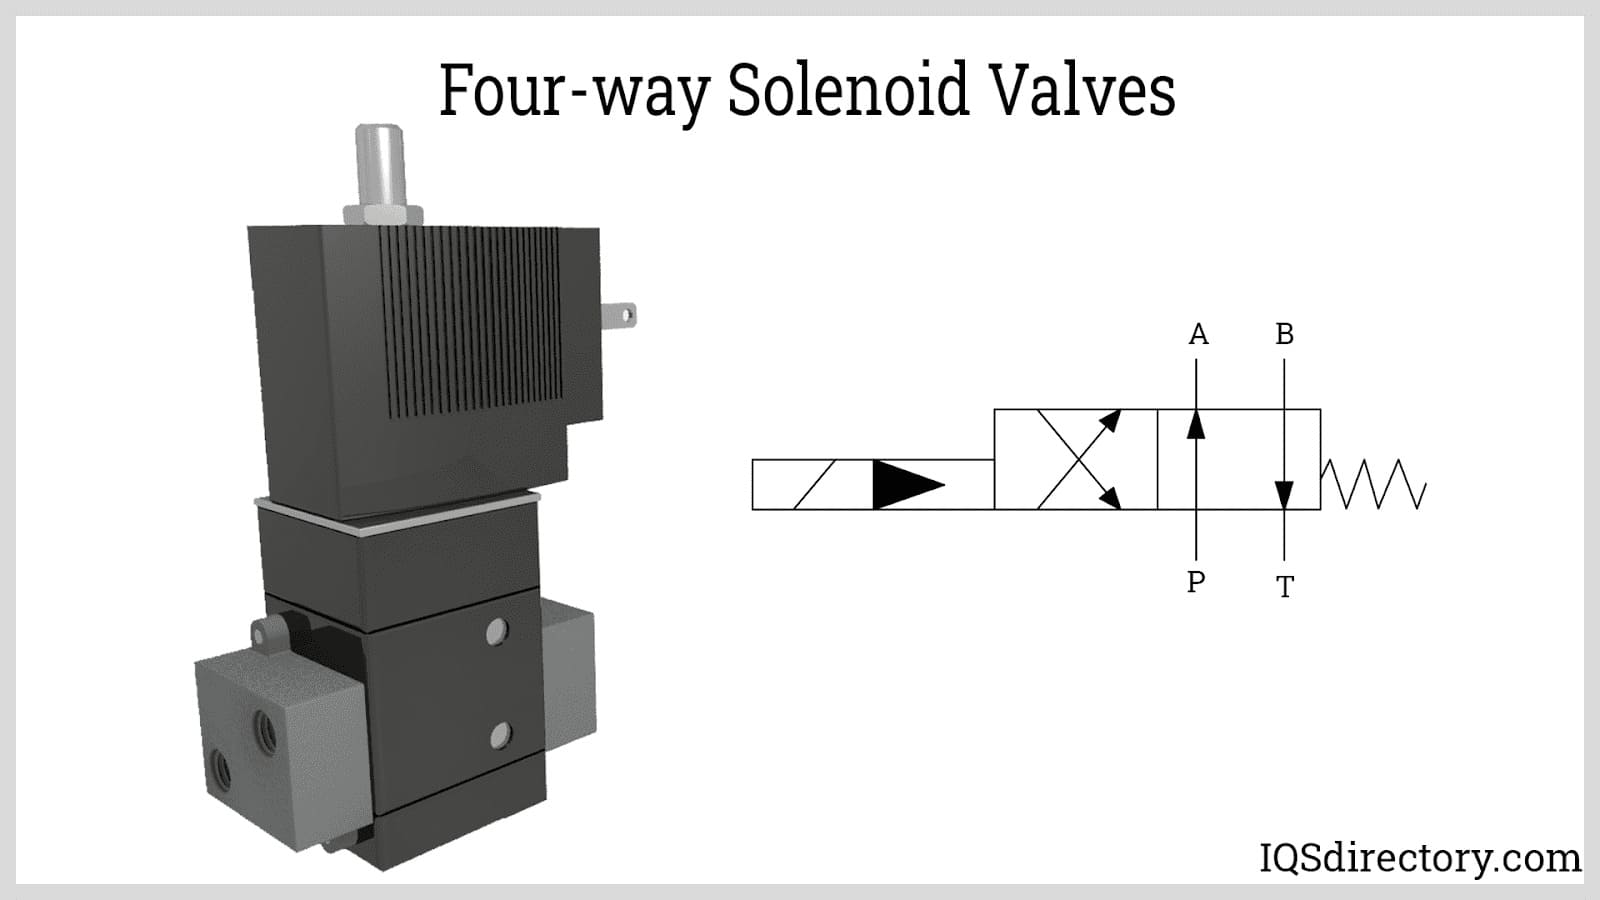 Four-way Solenoid Valves